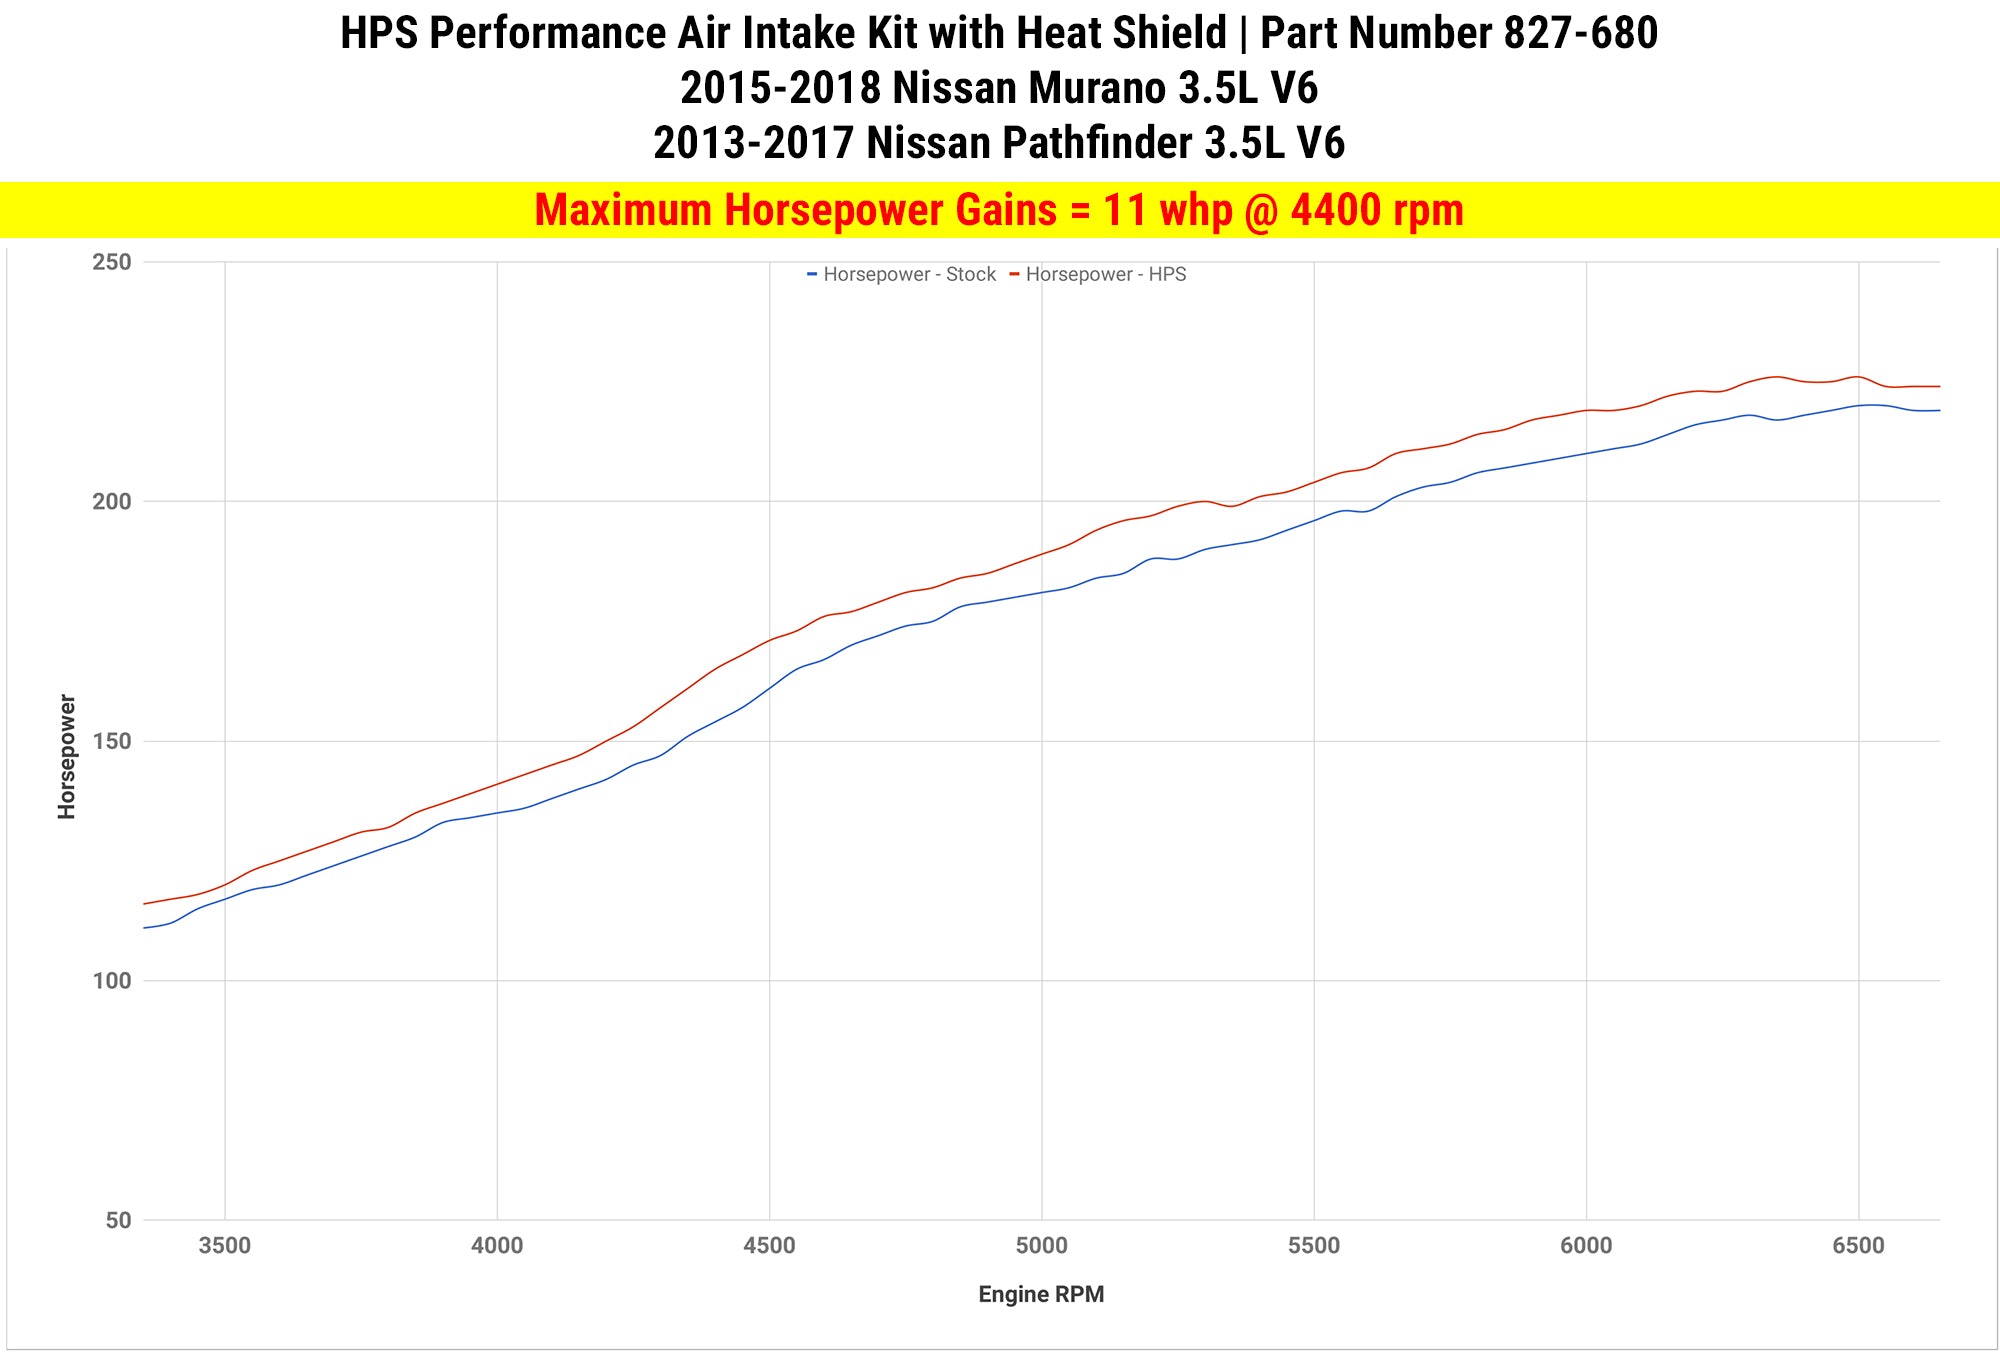 HPS Performance Shortram Air Intake Kit 2015-2018 Nissan Murano 3.5L V6 827-680P